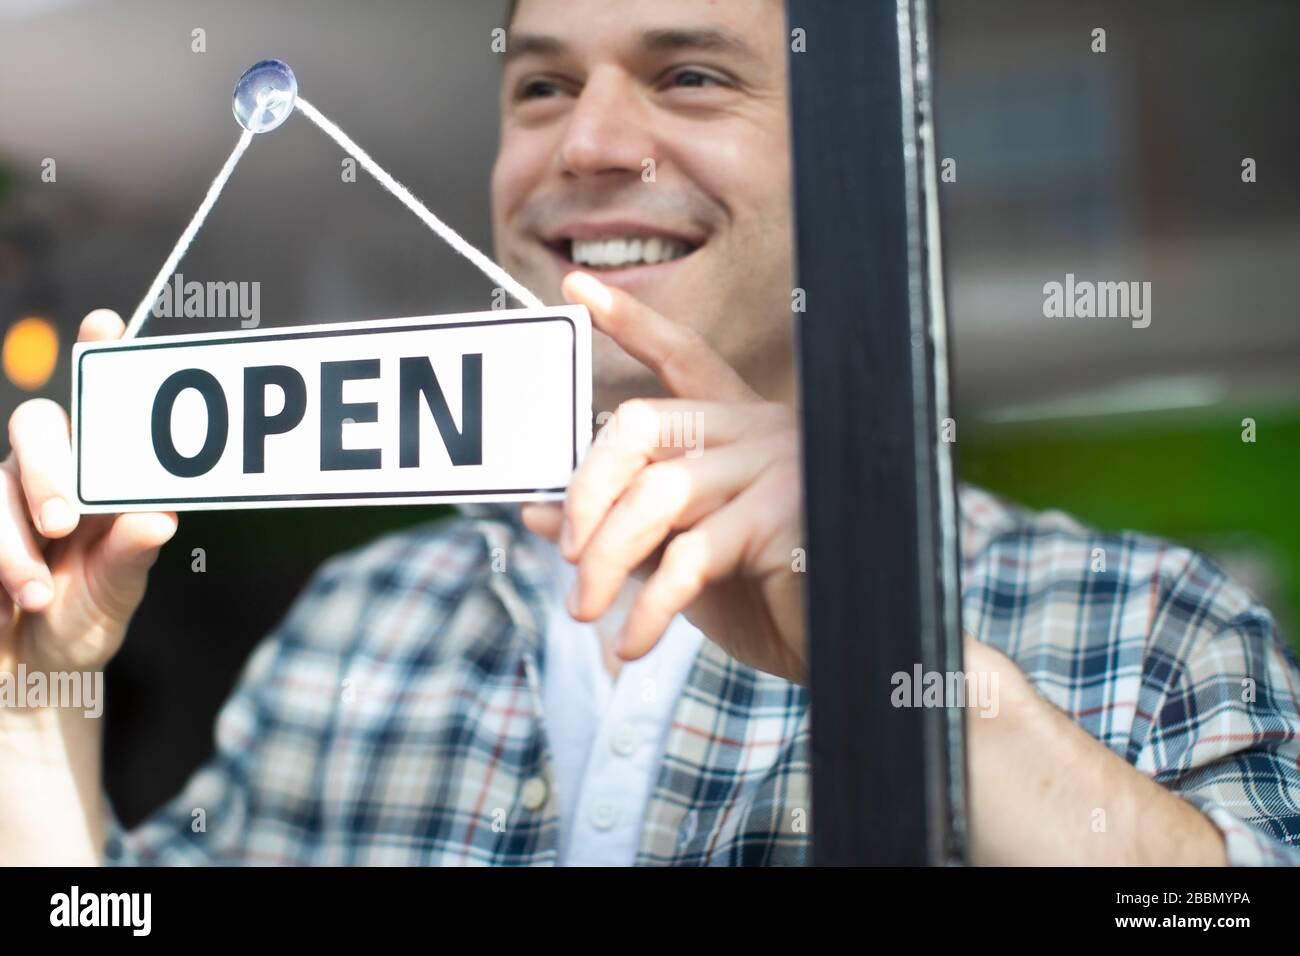 Smiling Small Business Owner Dreht Sich Um Open Sign On Shop Oder Store Window Oder Door Stockfoto